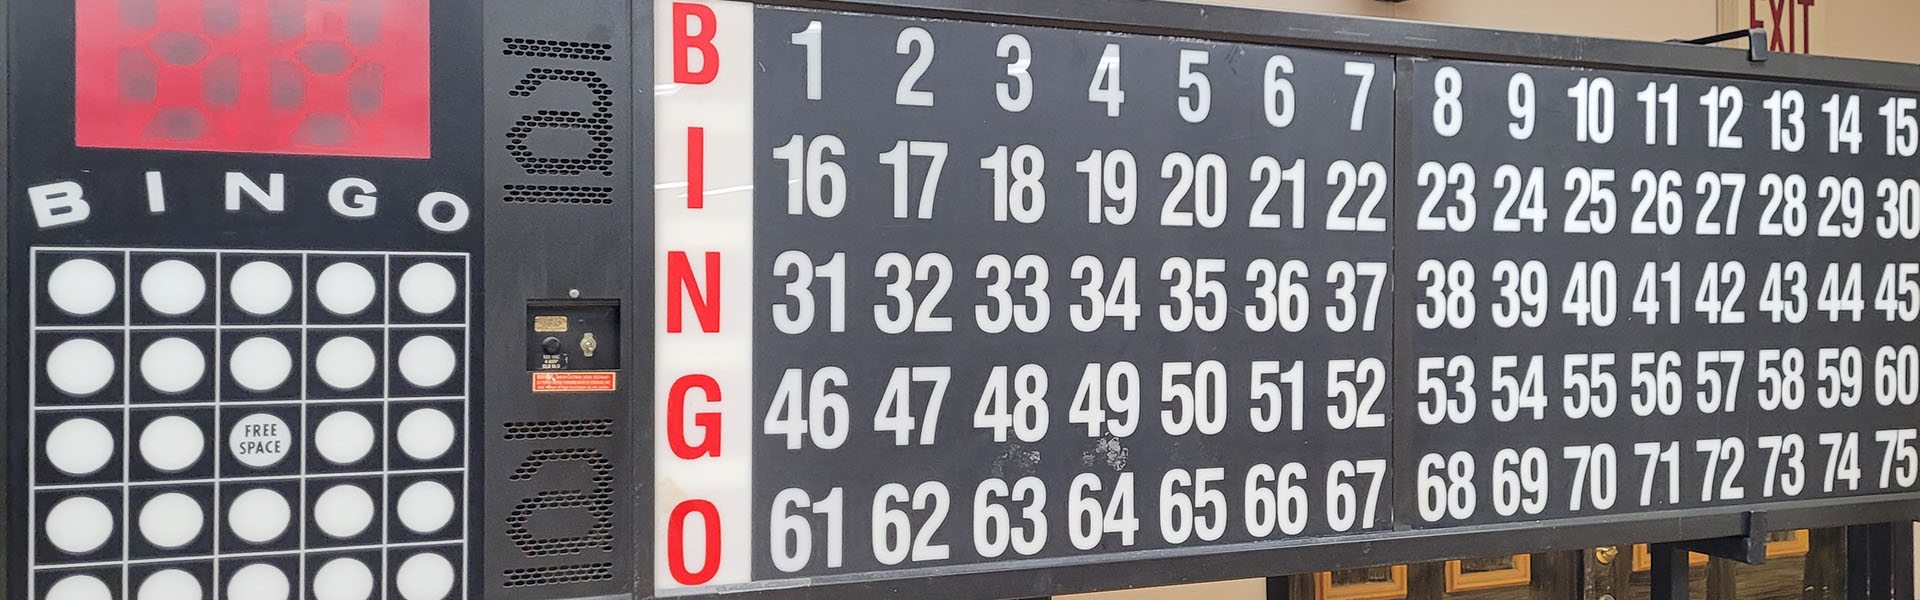 bingo board